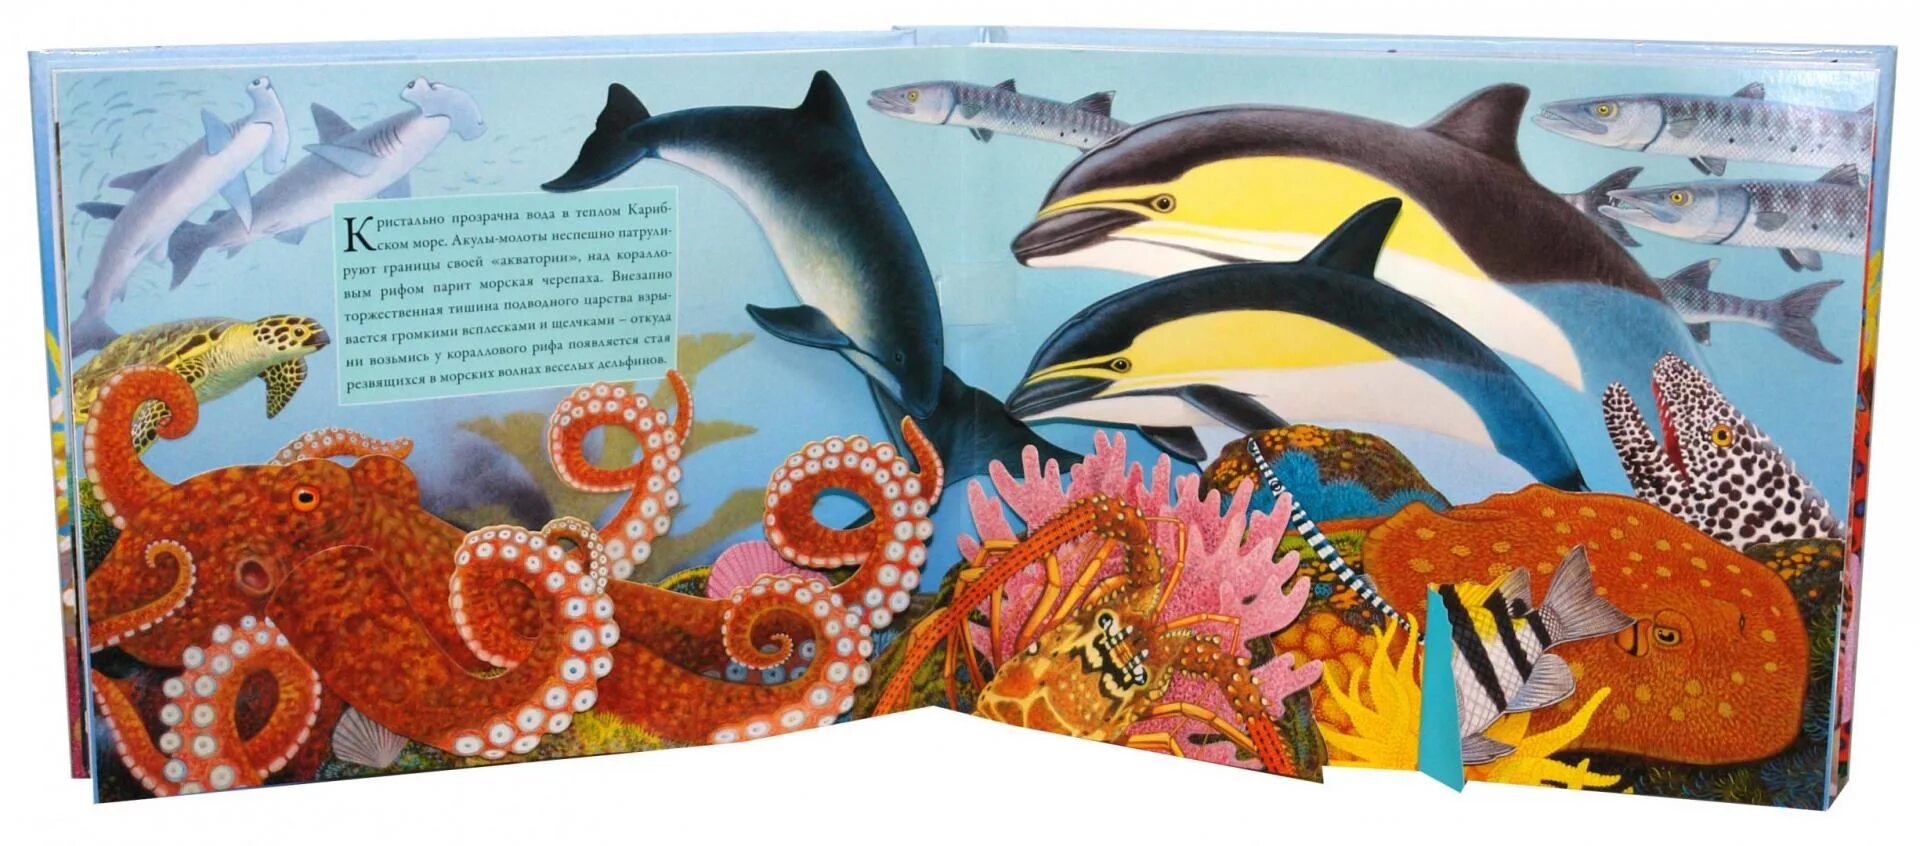 Обитатели океана конспект. Морские животные картинки. Книжка морские животные. Книга панорама океана. Животные морей и океанов книга.